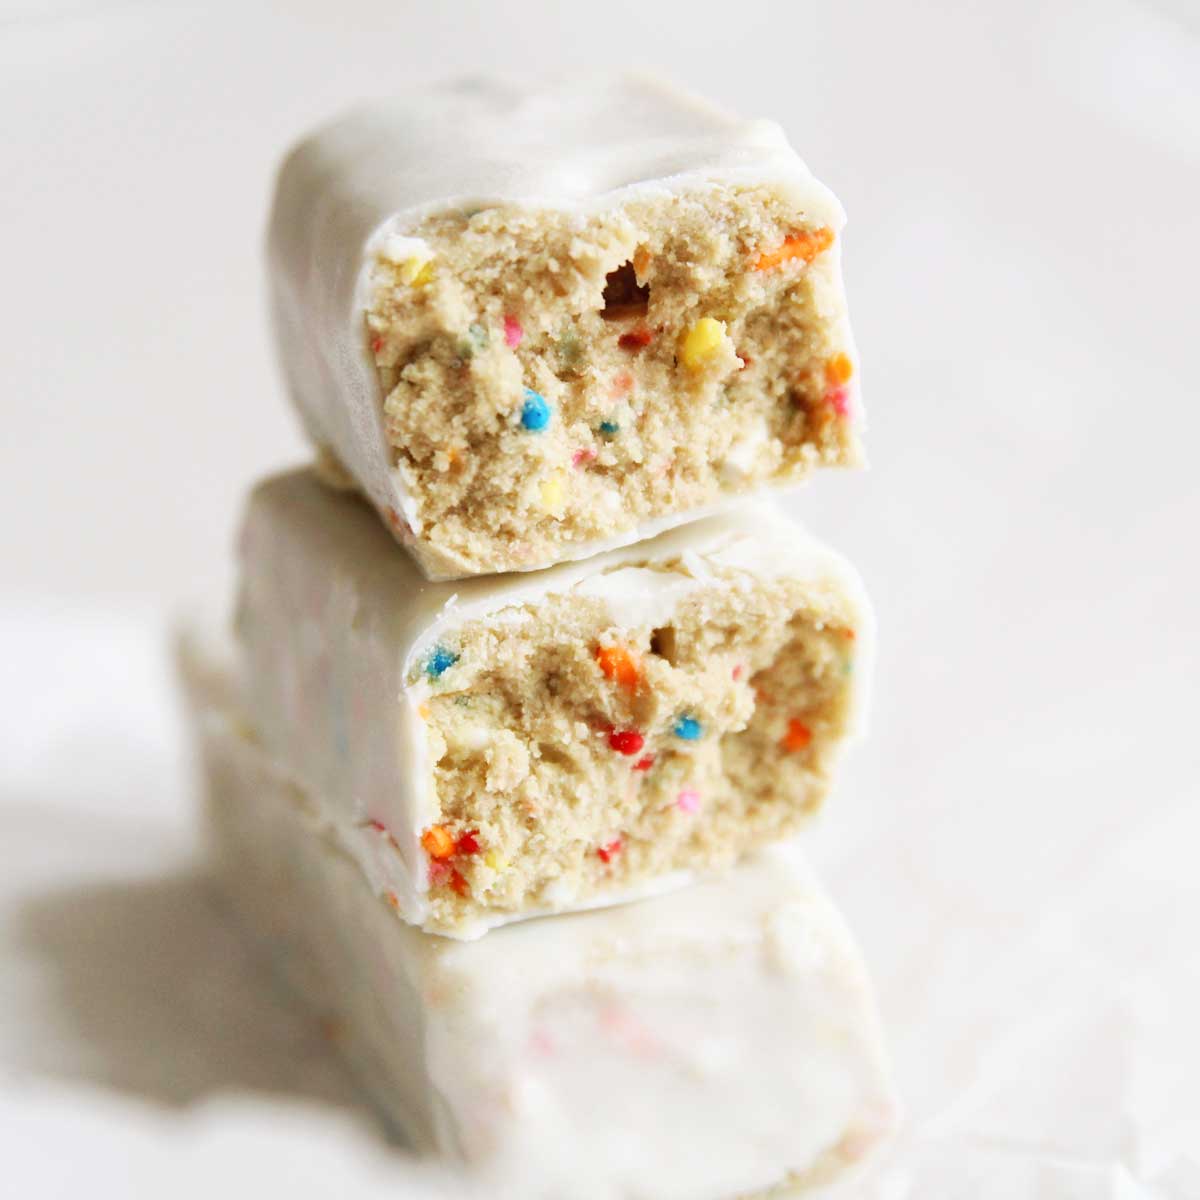 Applesauce Birthday Cake Protein Bars Recipe (Nut-Free, Plant-Based) - Chocolate Protein Balls